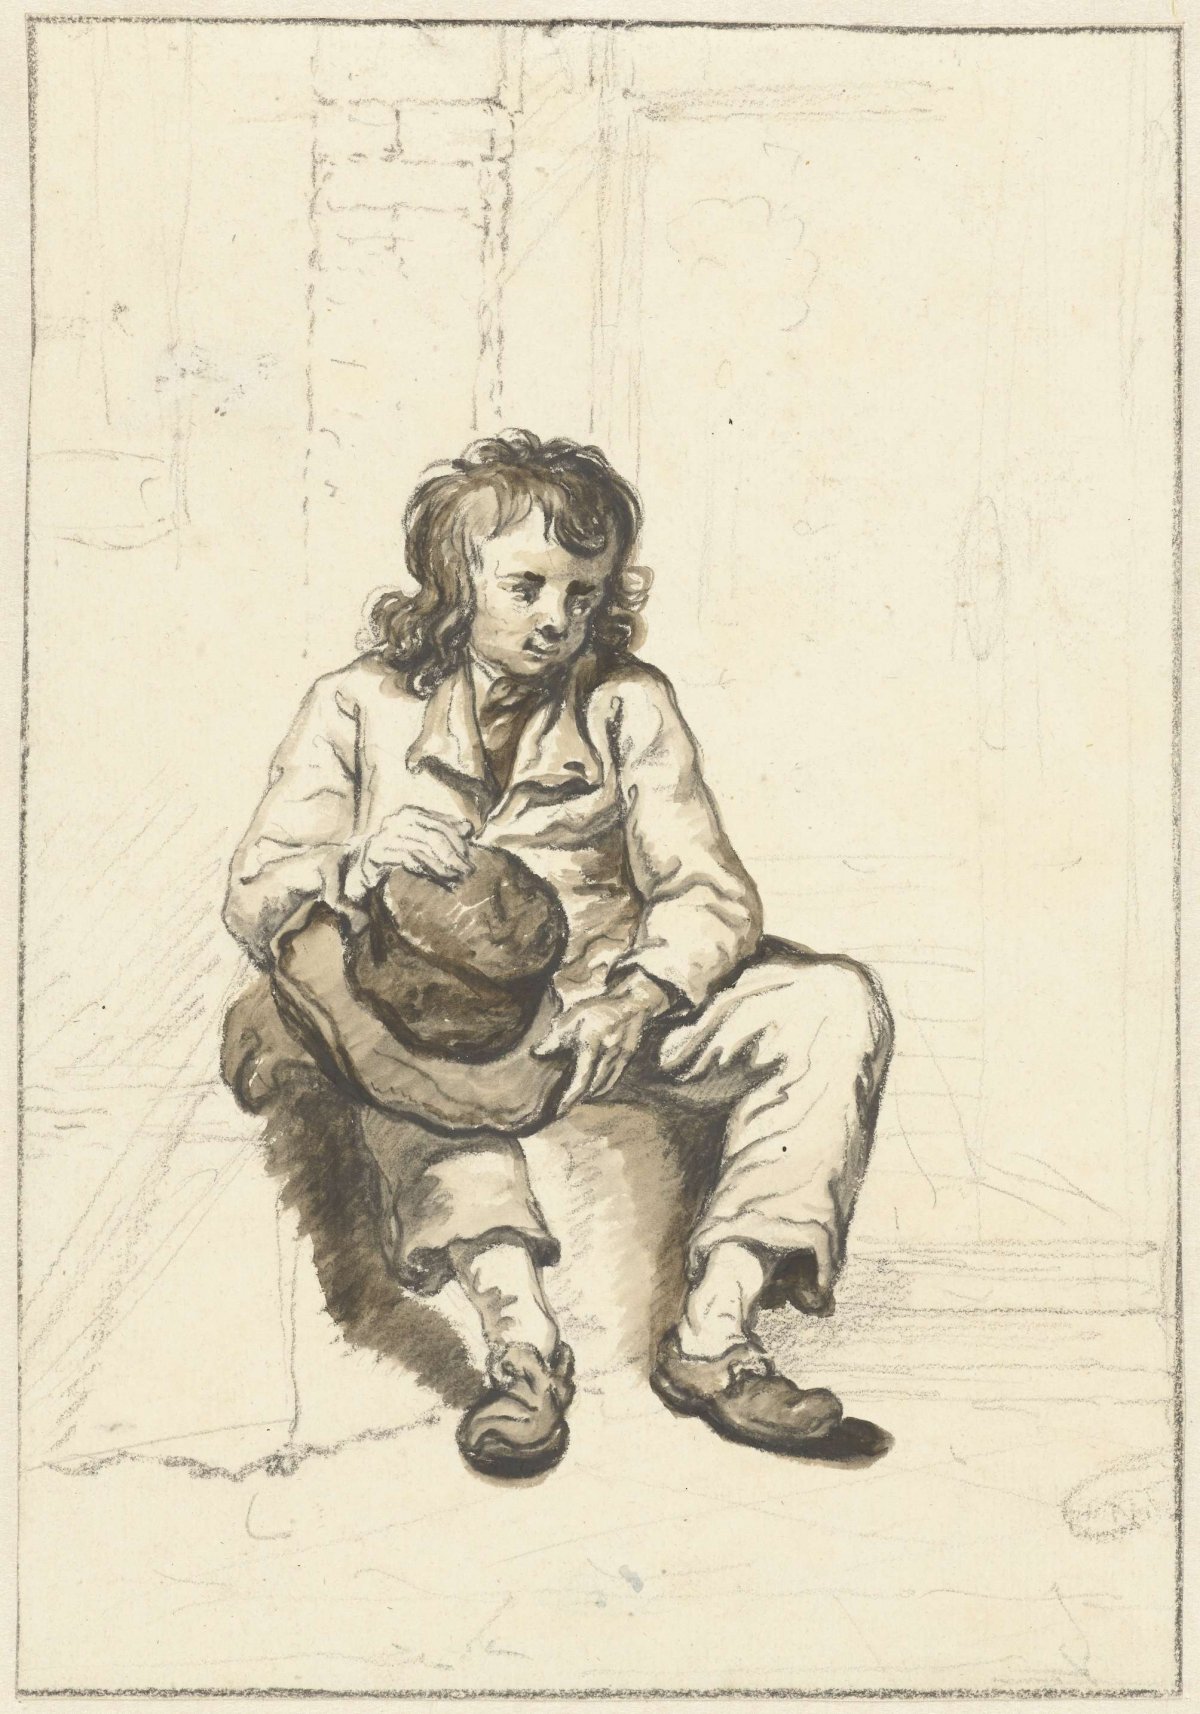 Seated boy with hat on lap at doorway, Abraham van Strij (I), 1763 - 1826